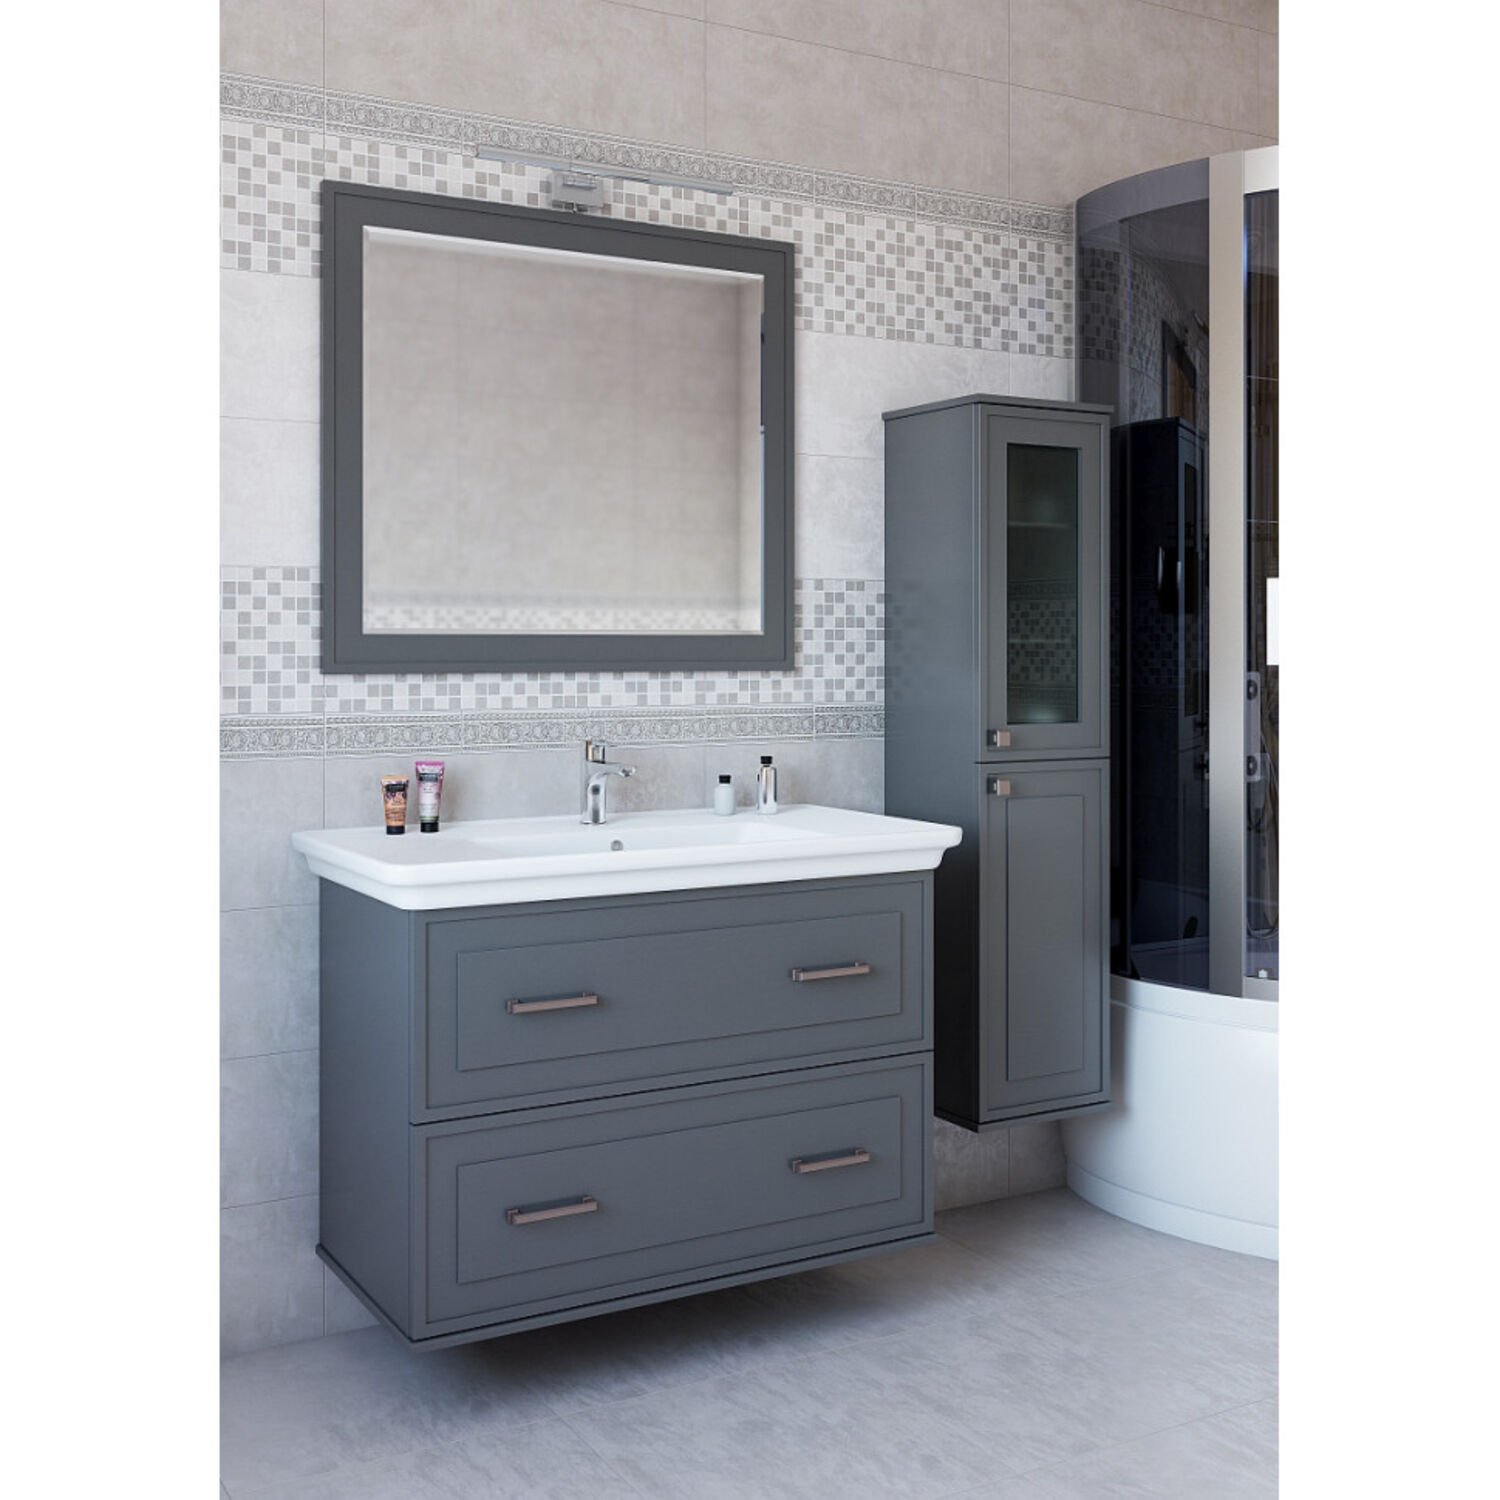 Зеркало Sanflor Модена 105x85, цвет серый - фото 1